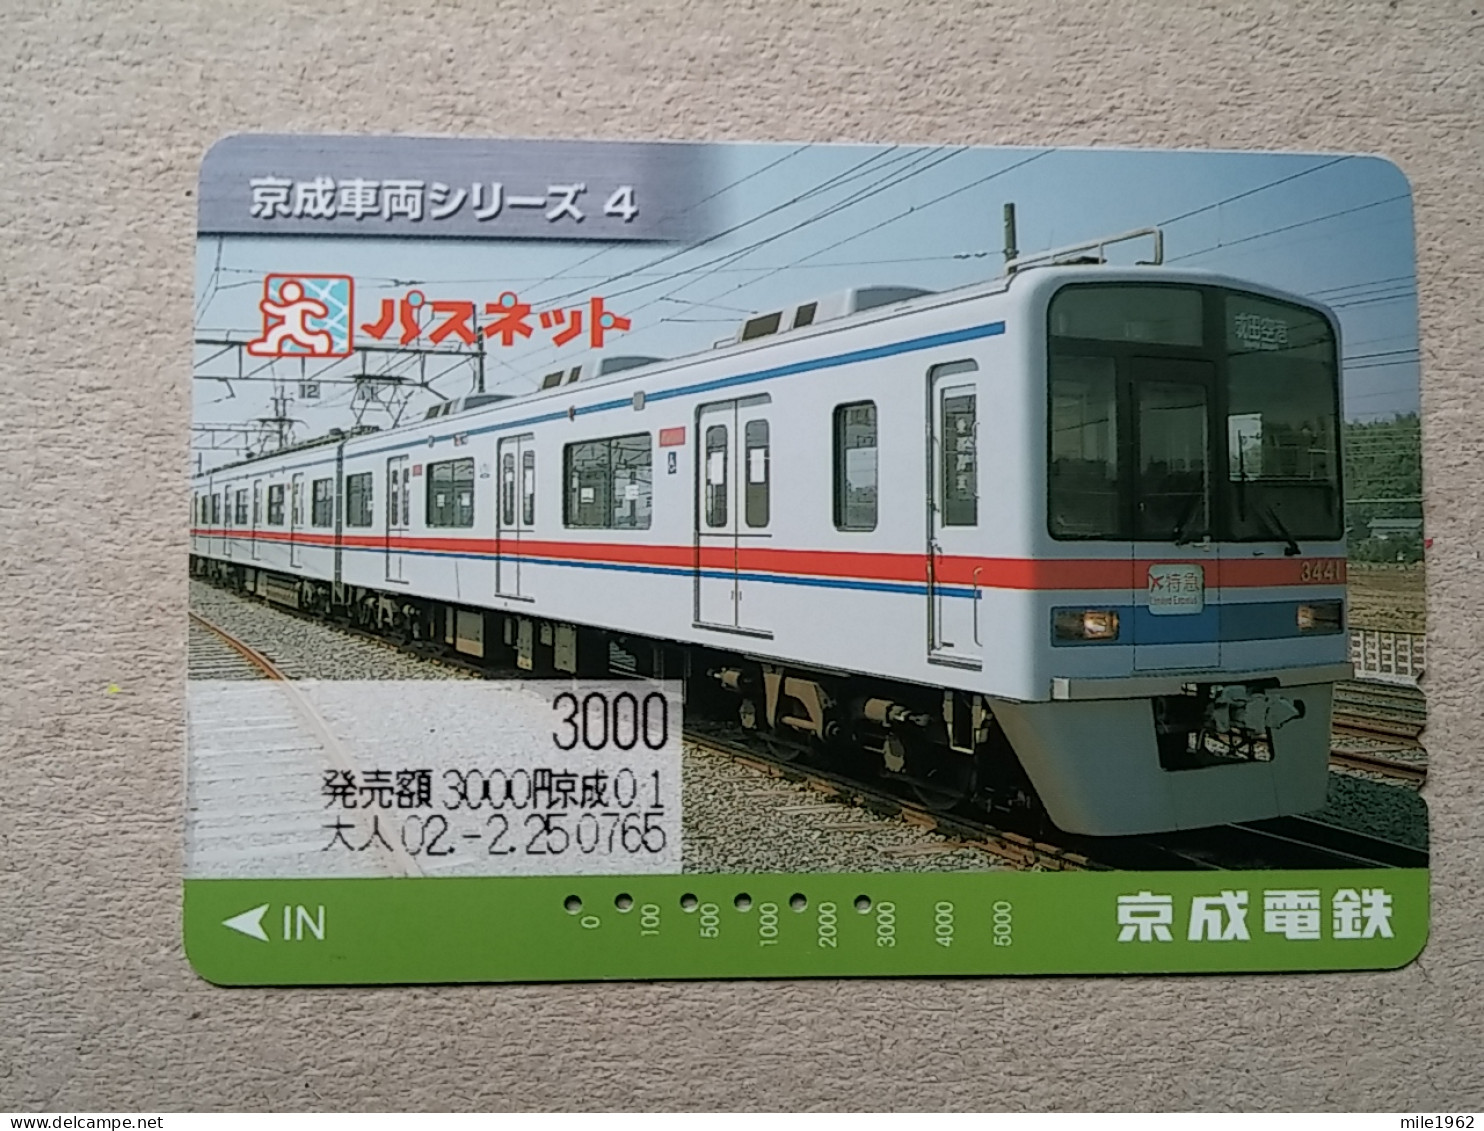 T-612 - JAPAN, Japon, Nipon, Carte Prepayee, Prepaid Card, CARD, RAILWAY, TRAIN, CHEMIN DE FER - Treinen